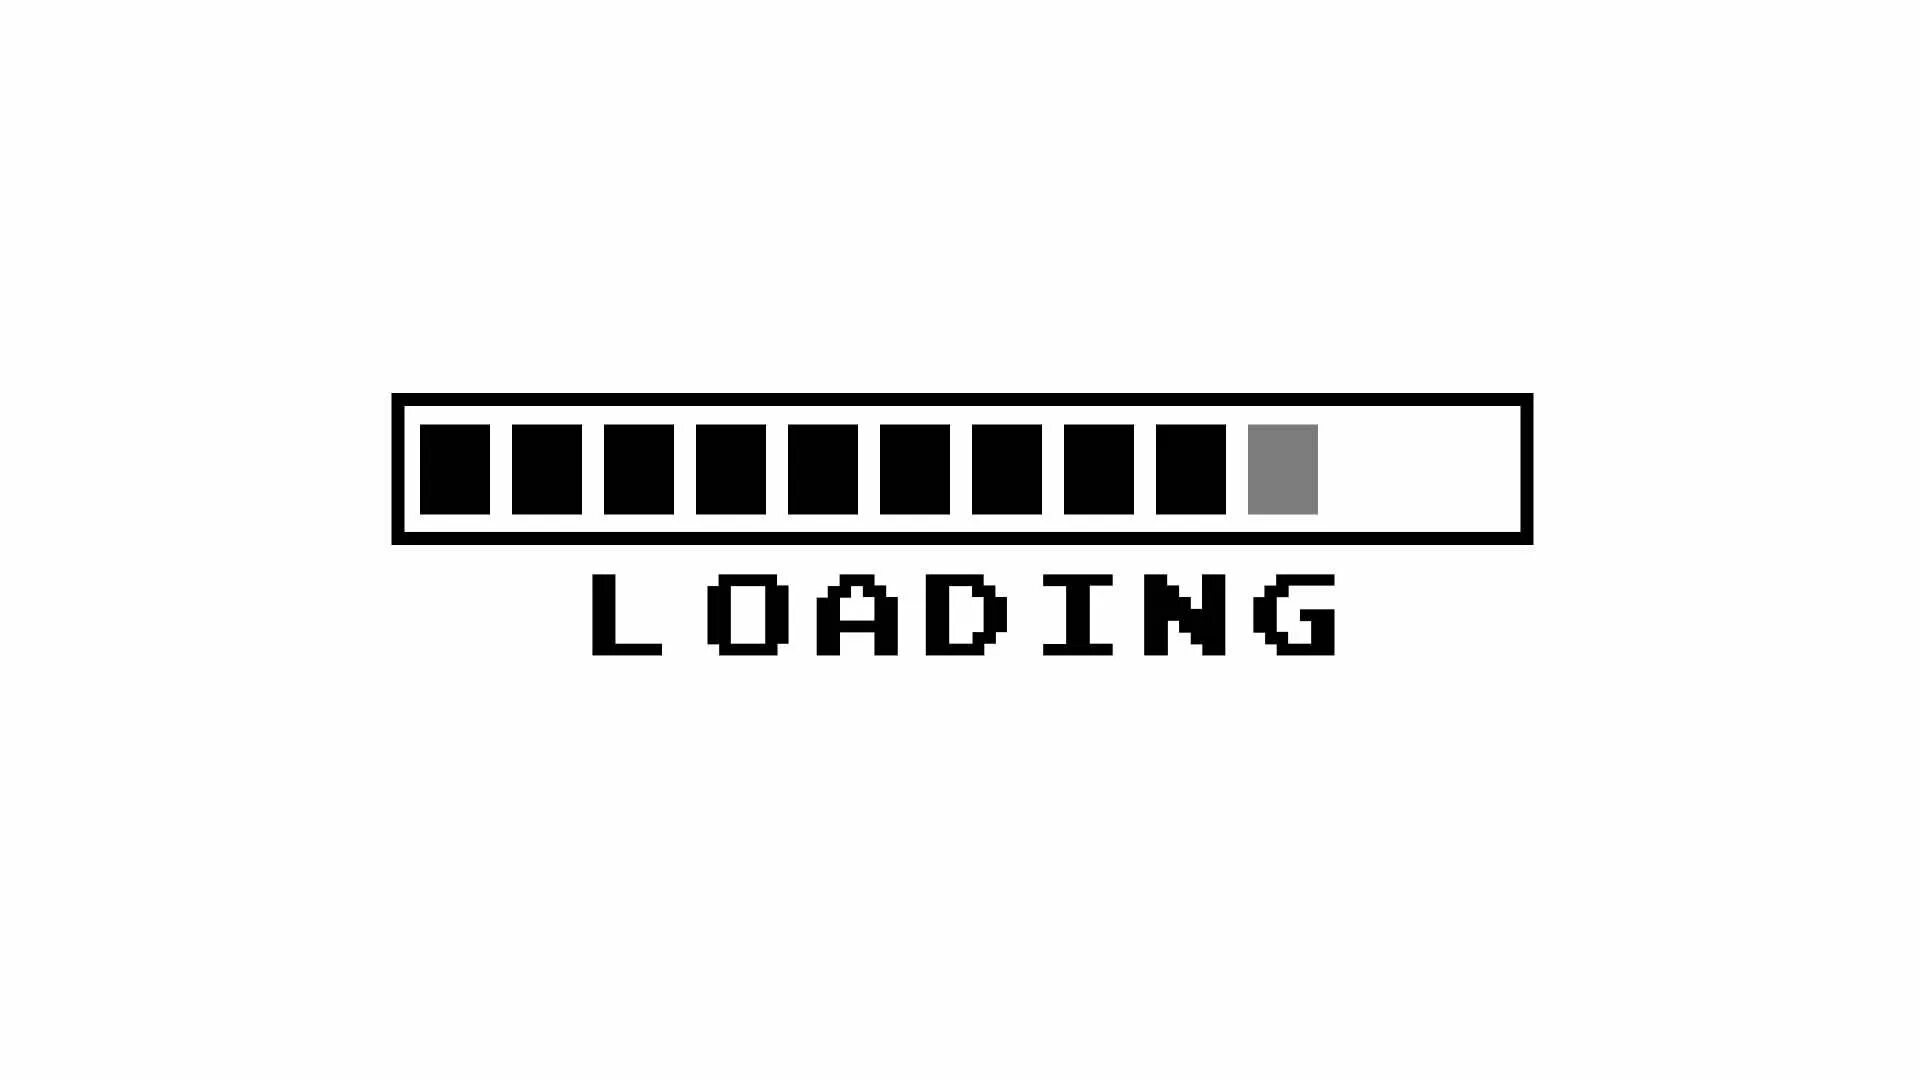 Host loading. Loading без фона. Надпись loading. Надпись загрузка. Значок загрузки.